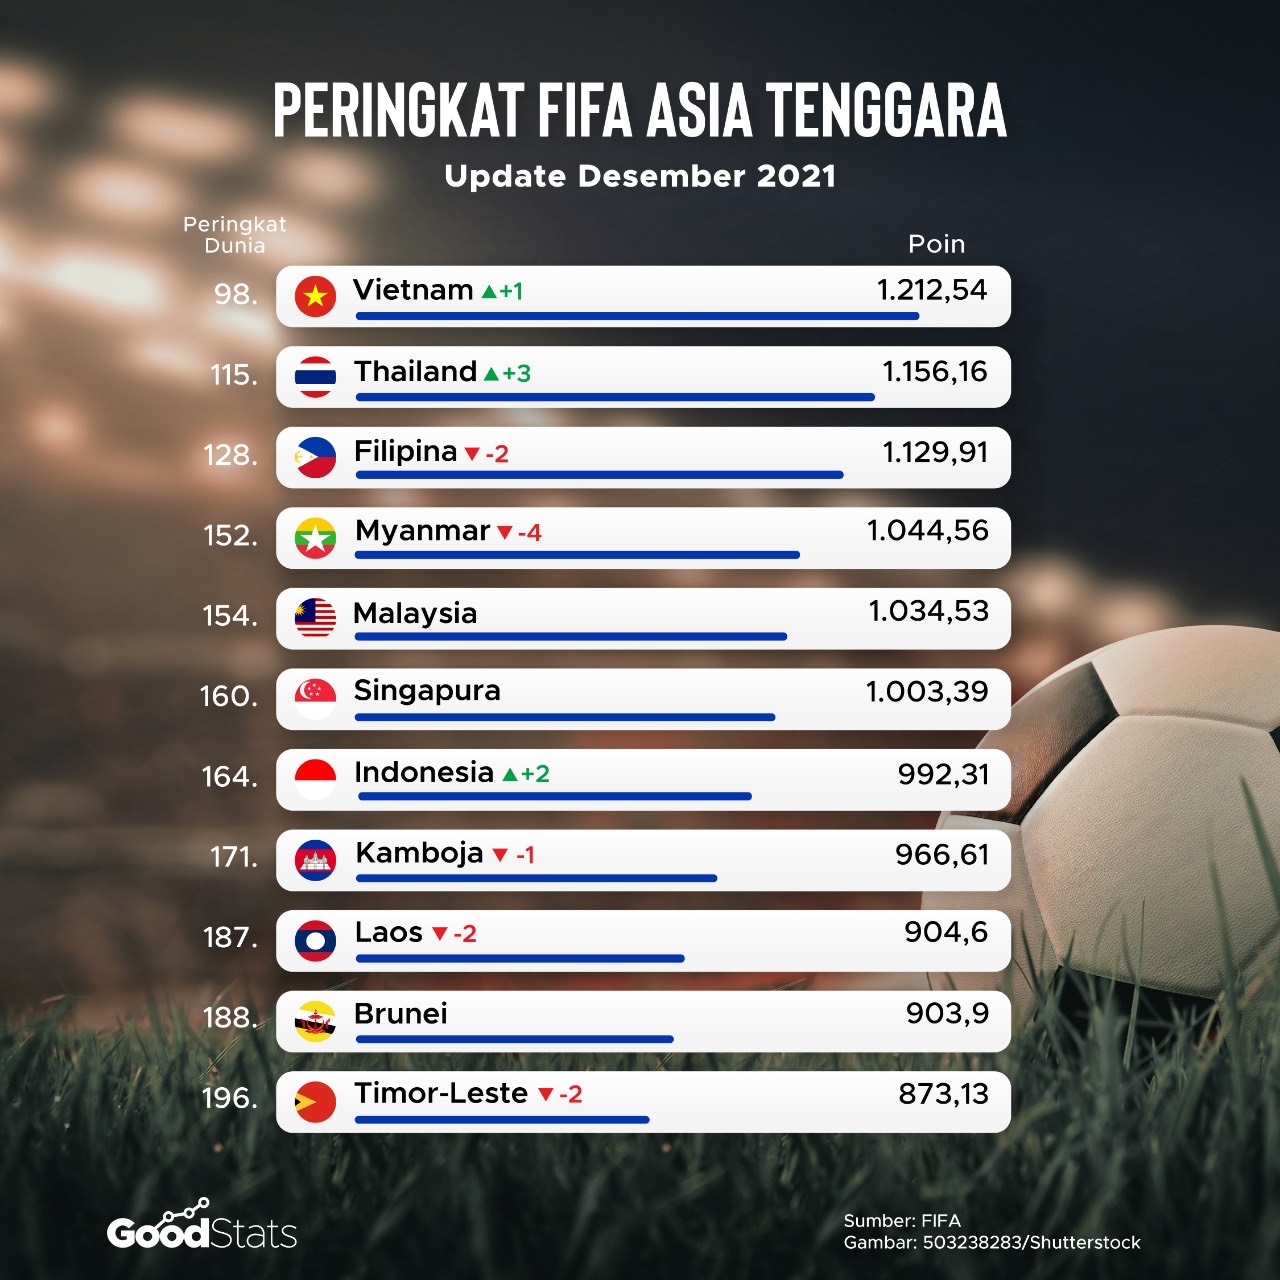 Peringkat FIFA Asia Tenggara per 23 Desember 2021 | GoodStats